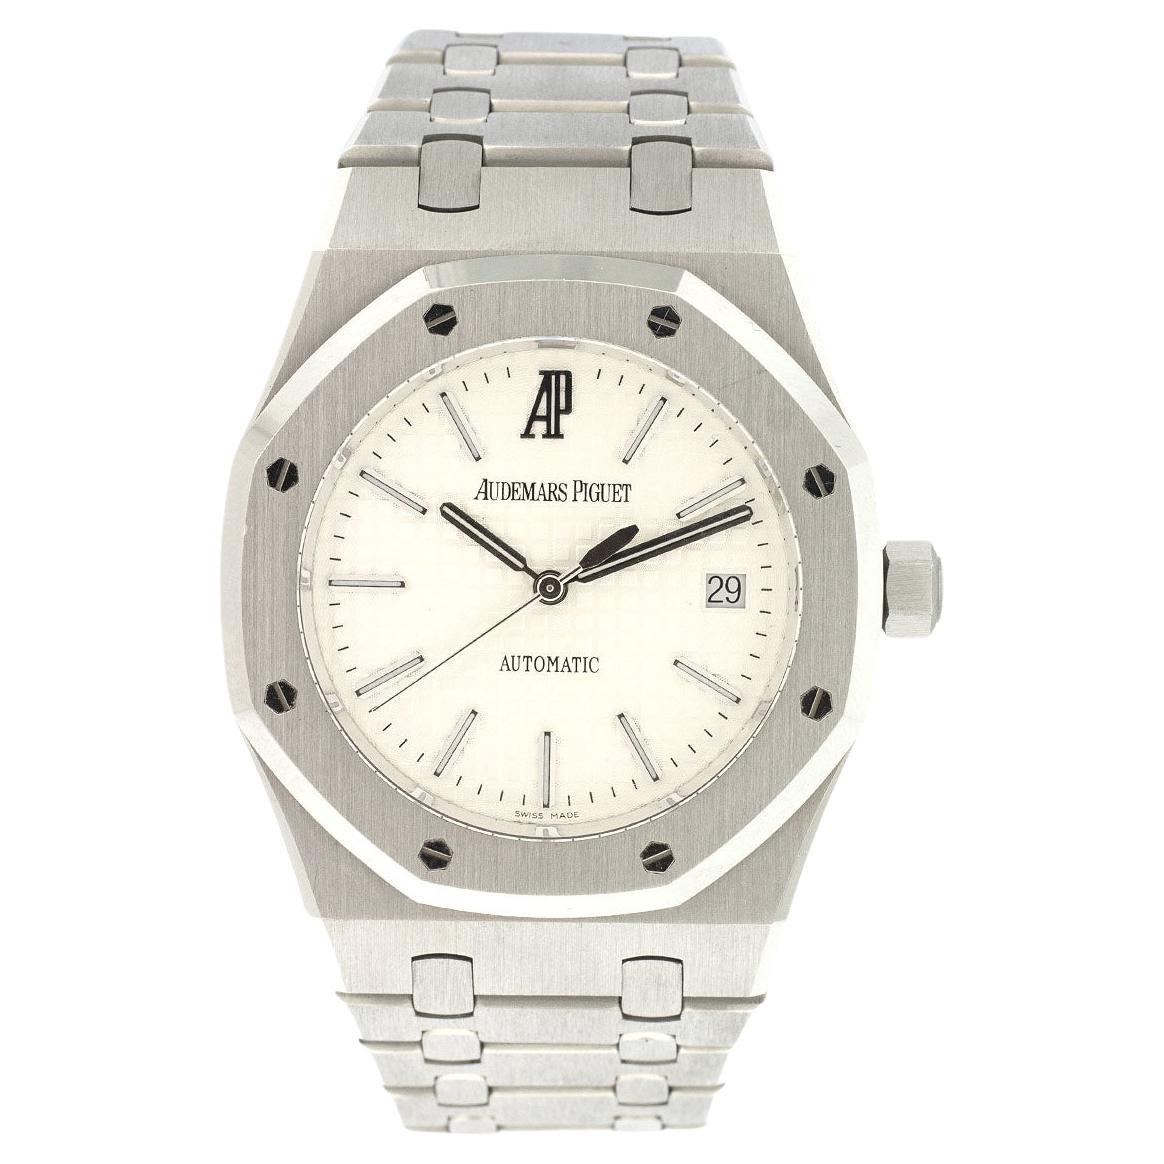 Audemars Piguet 15300 Royal Oak White Dial Watch